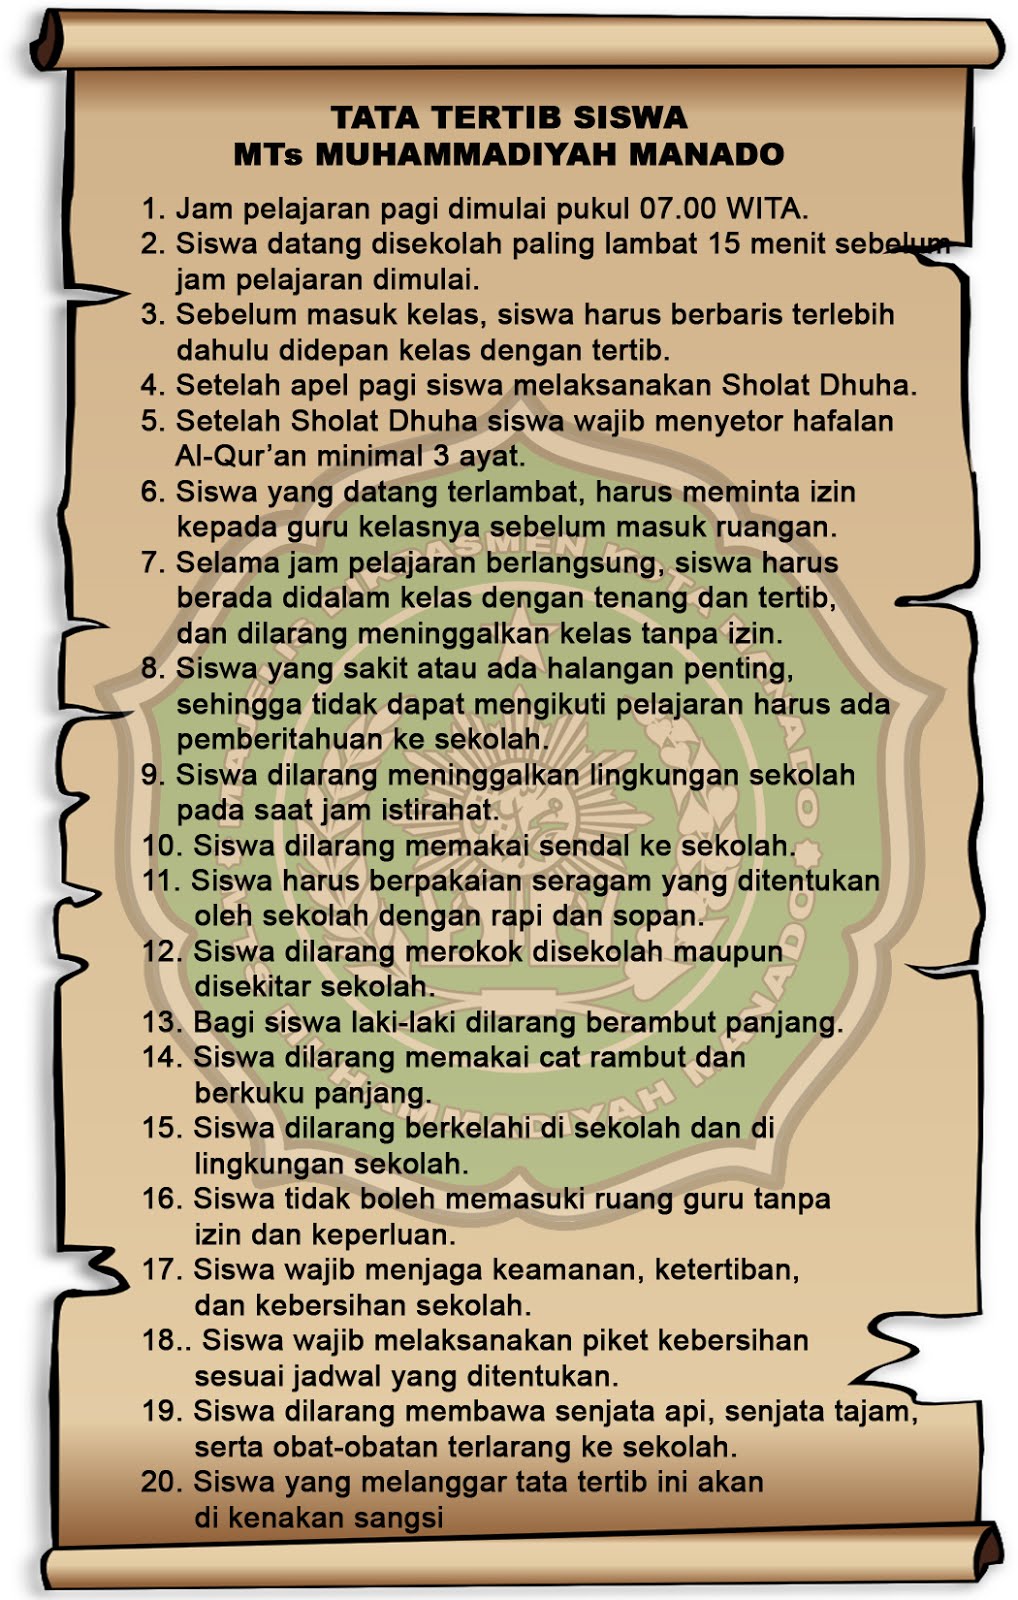 Tata Tertib Siswa MTs. Muhammadiyah Manado